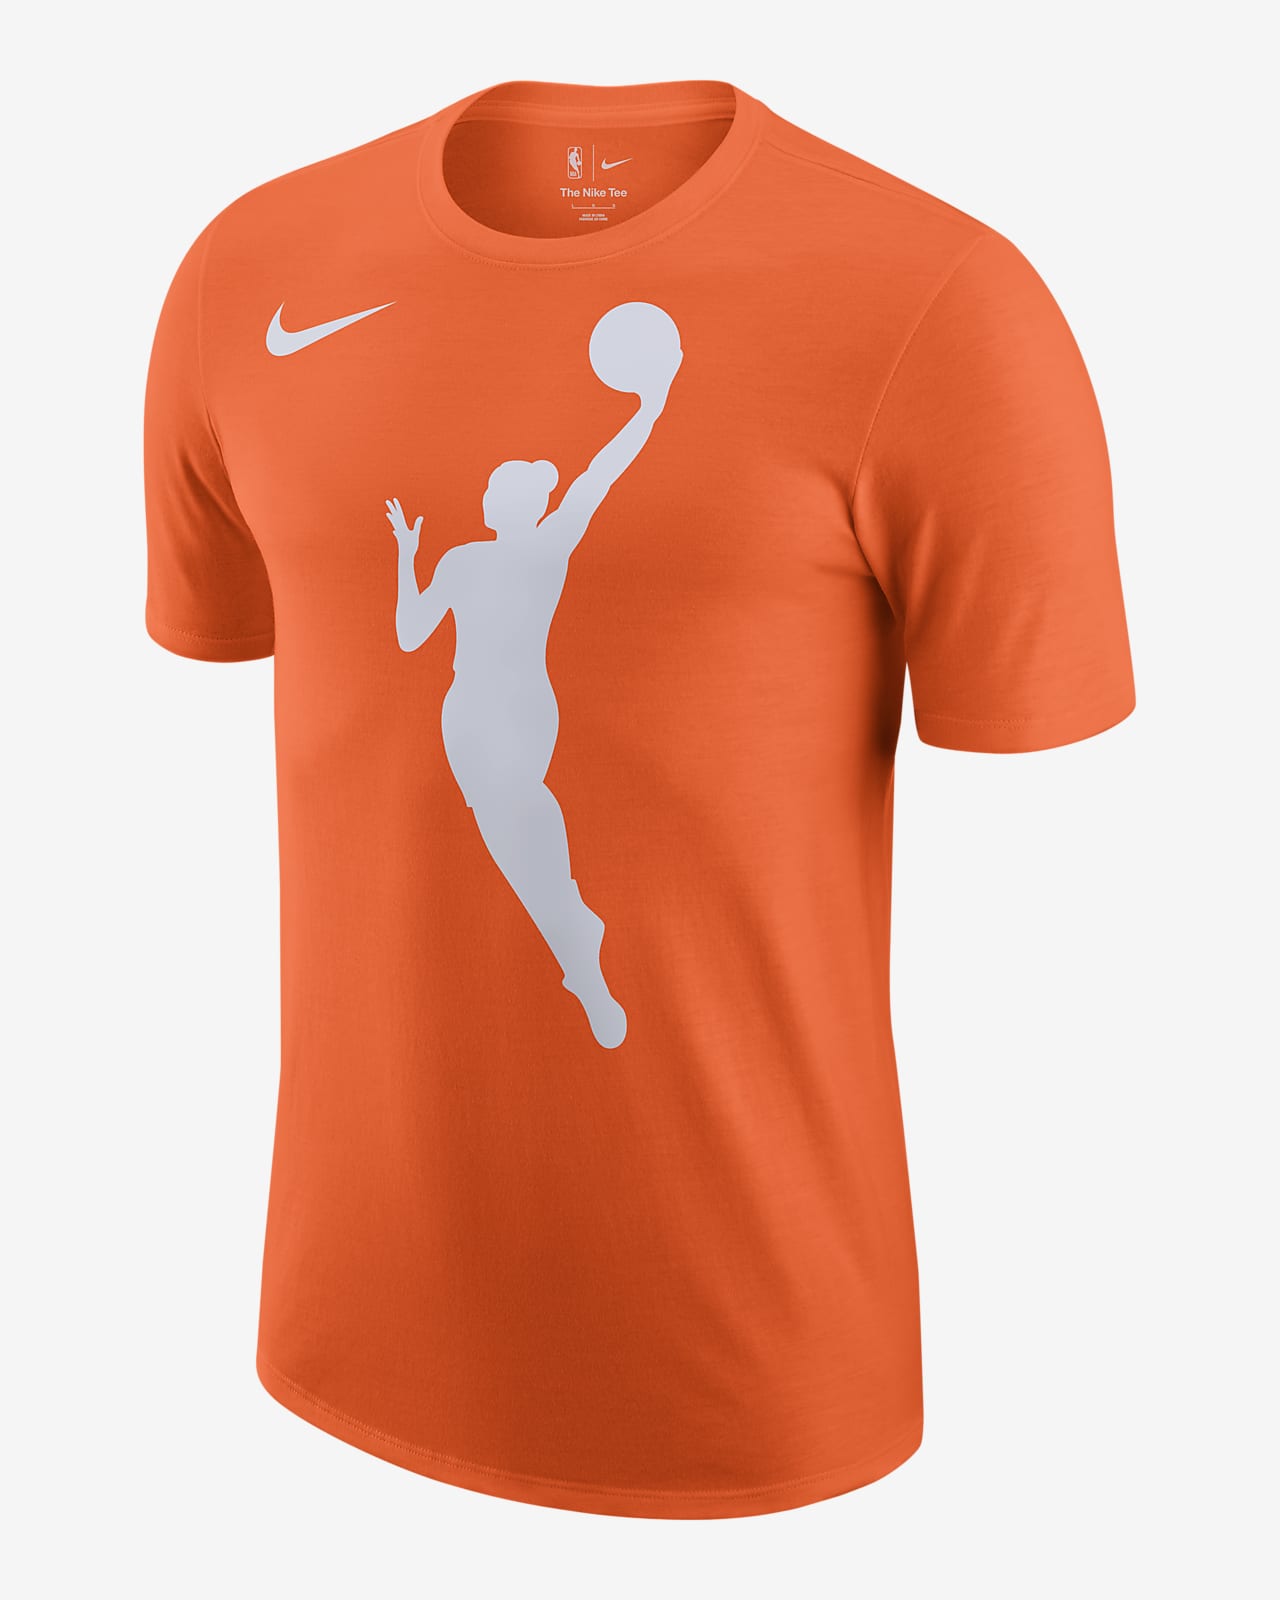 Team 13 Nike WNBA-shirt